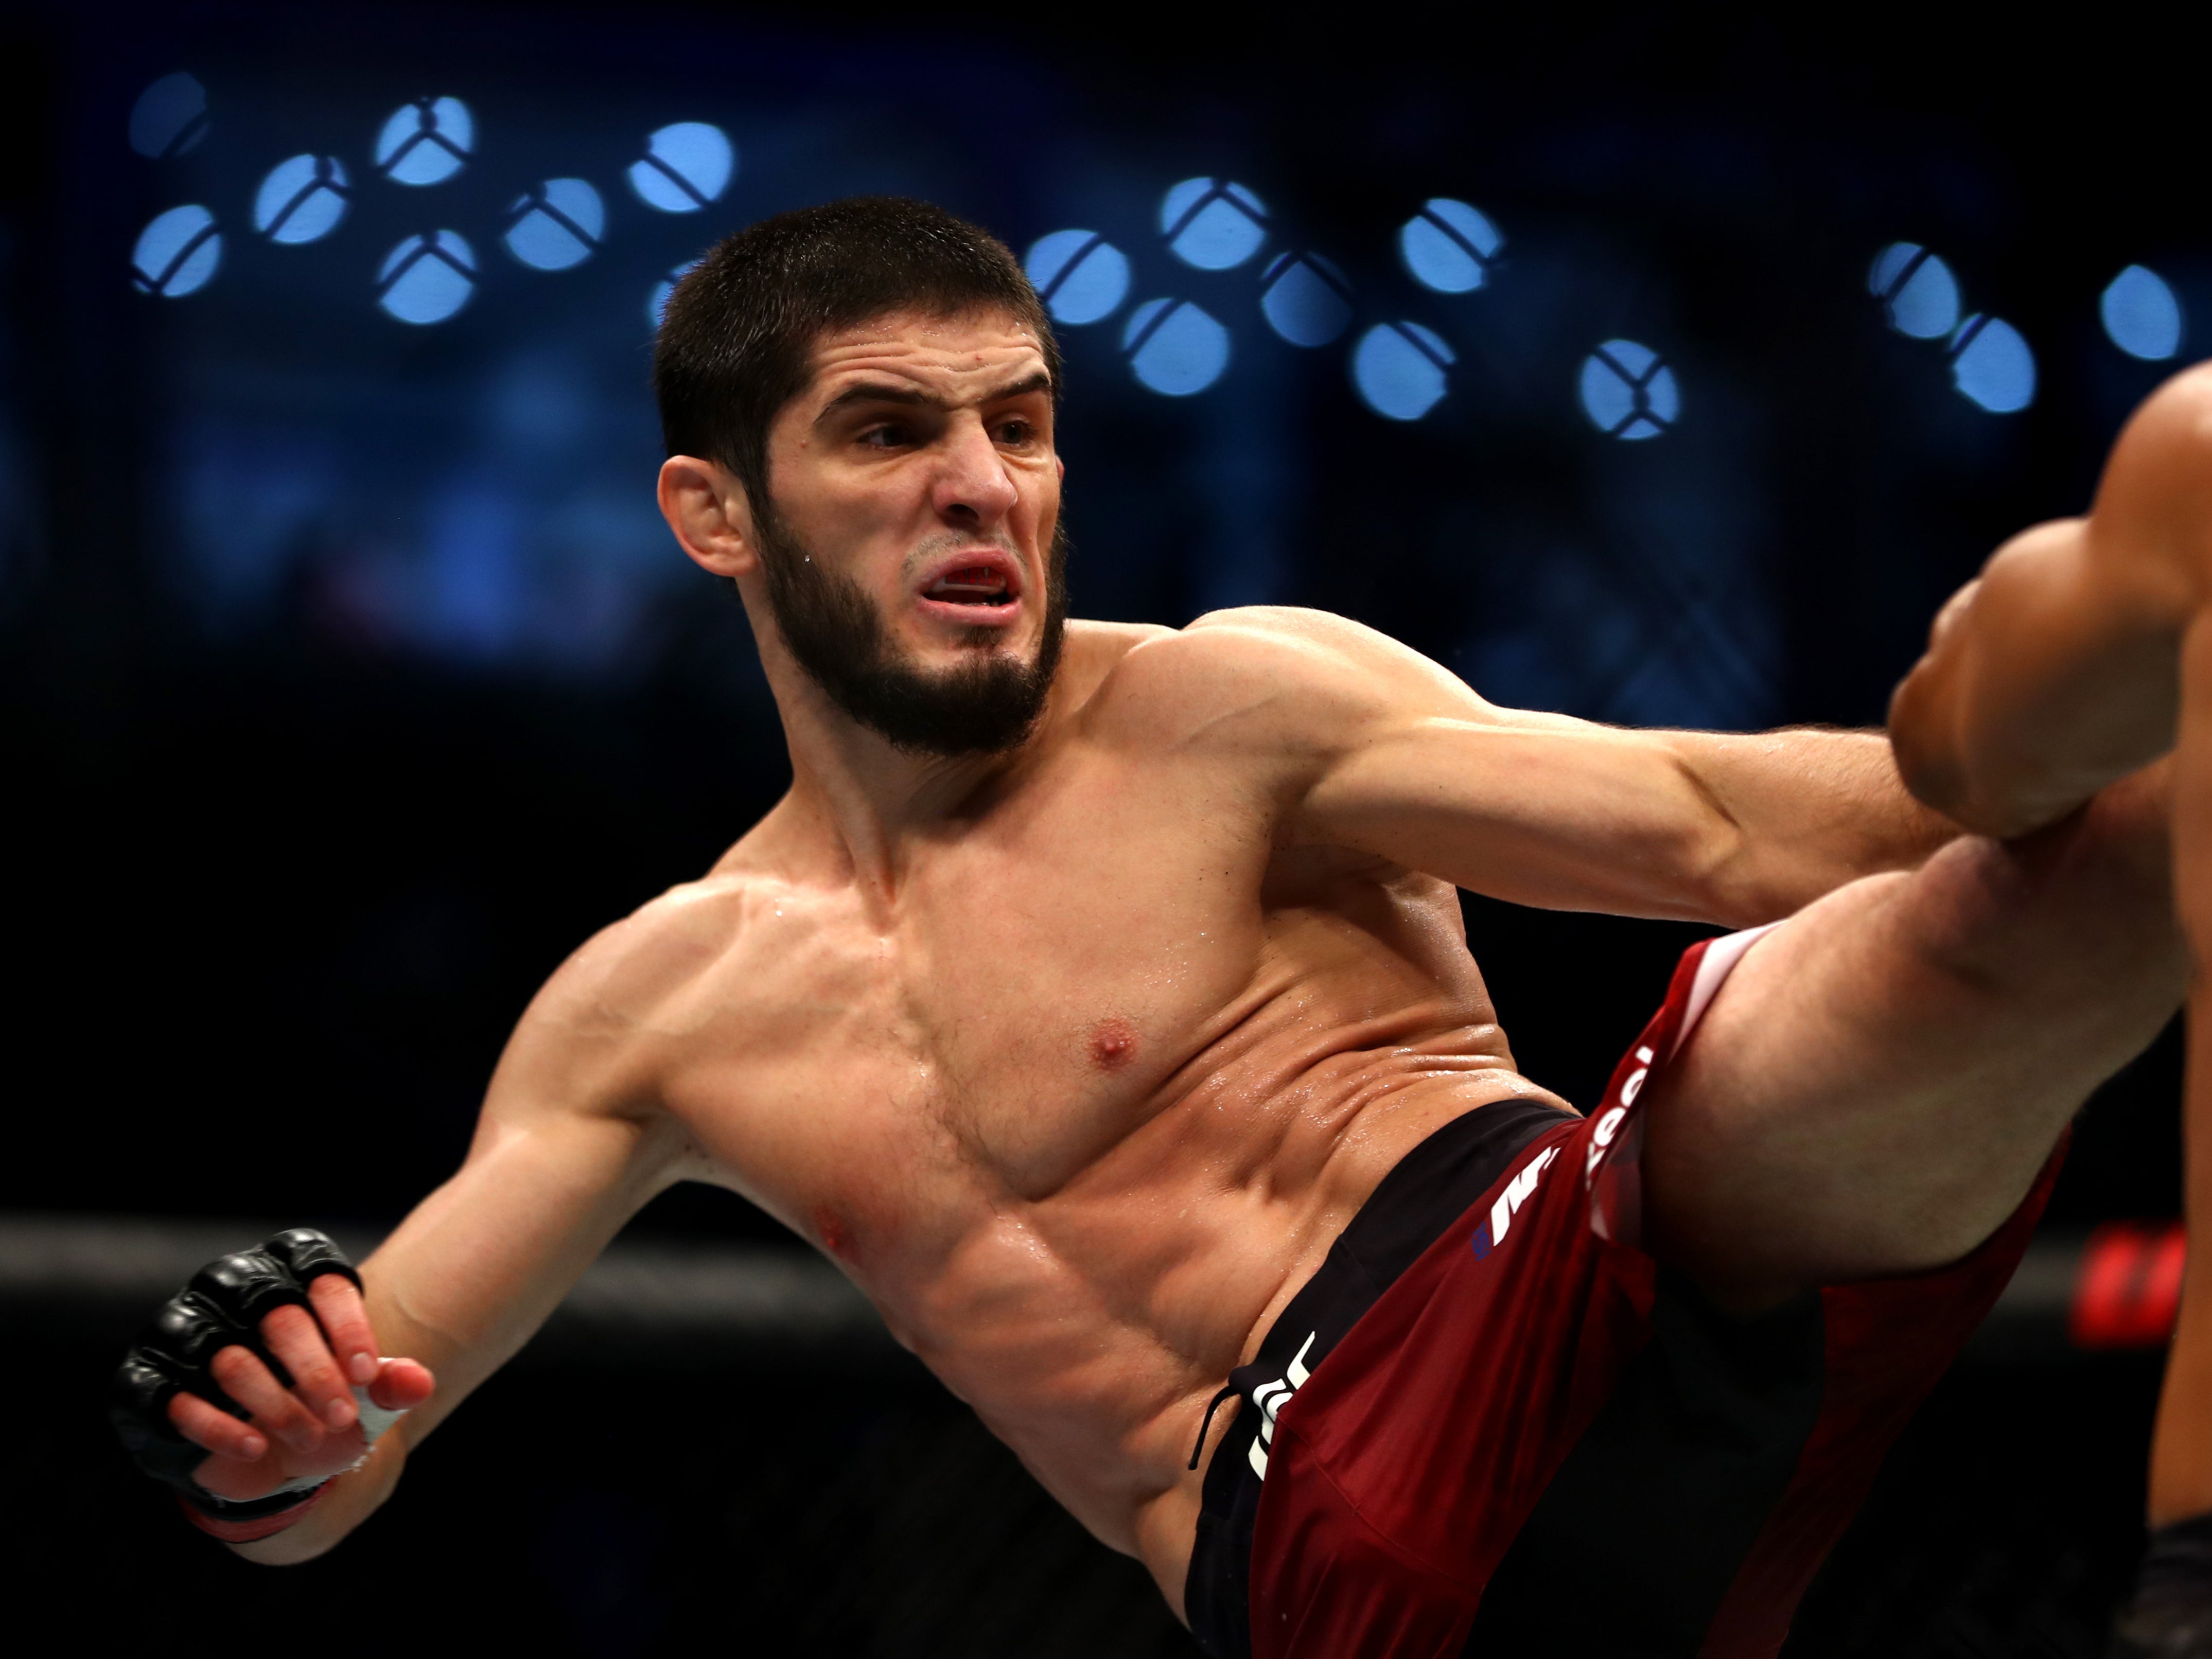 UFC lightweight contender Islam Makhachev has won 10 fights in a row